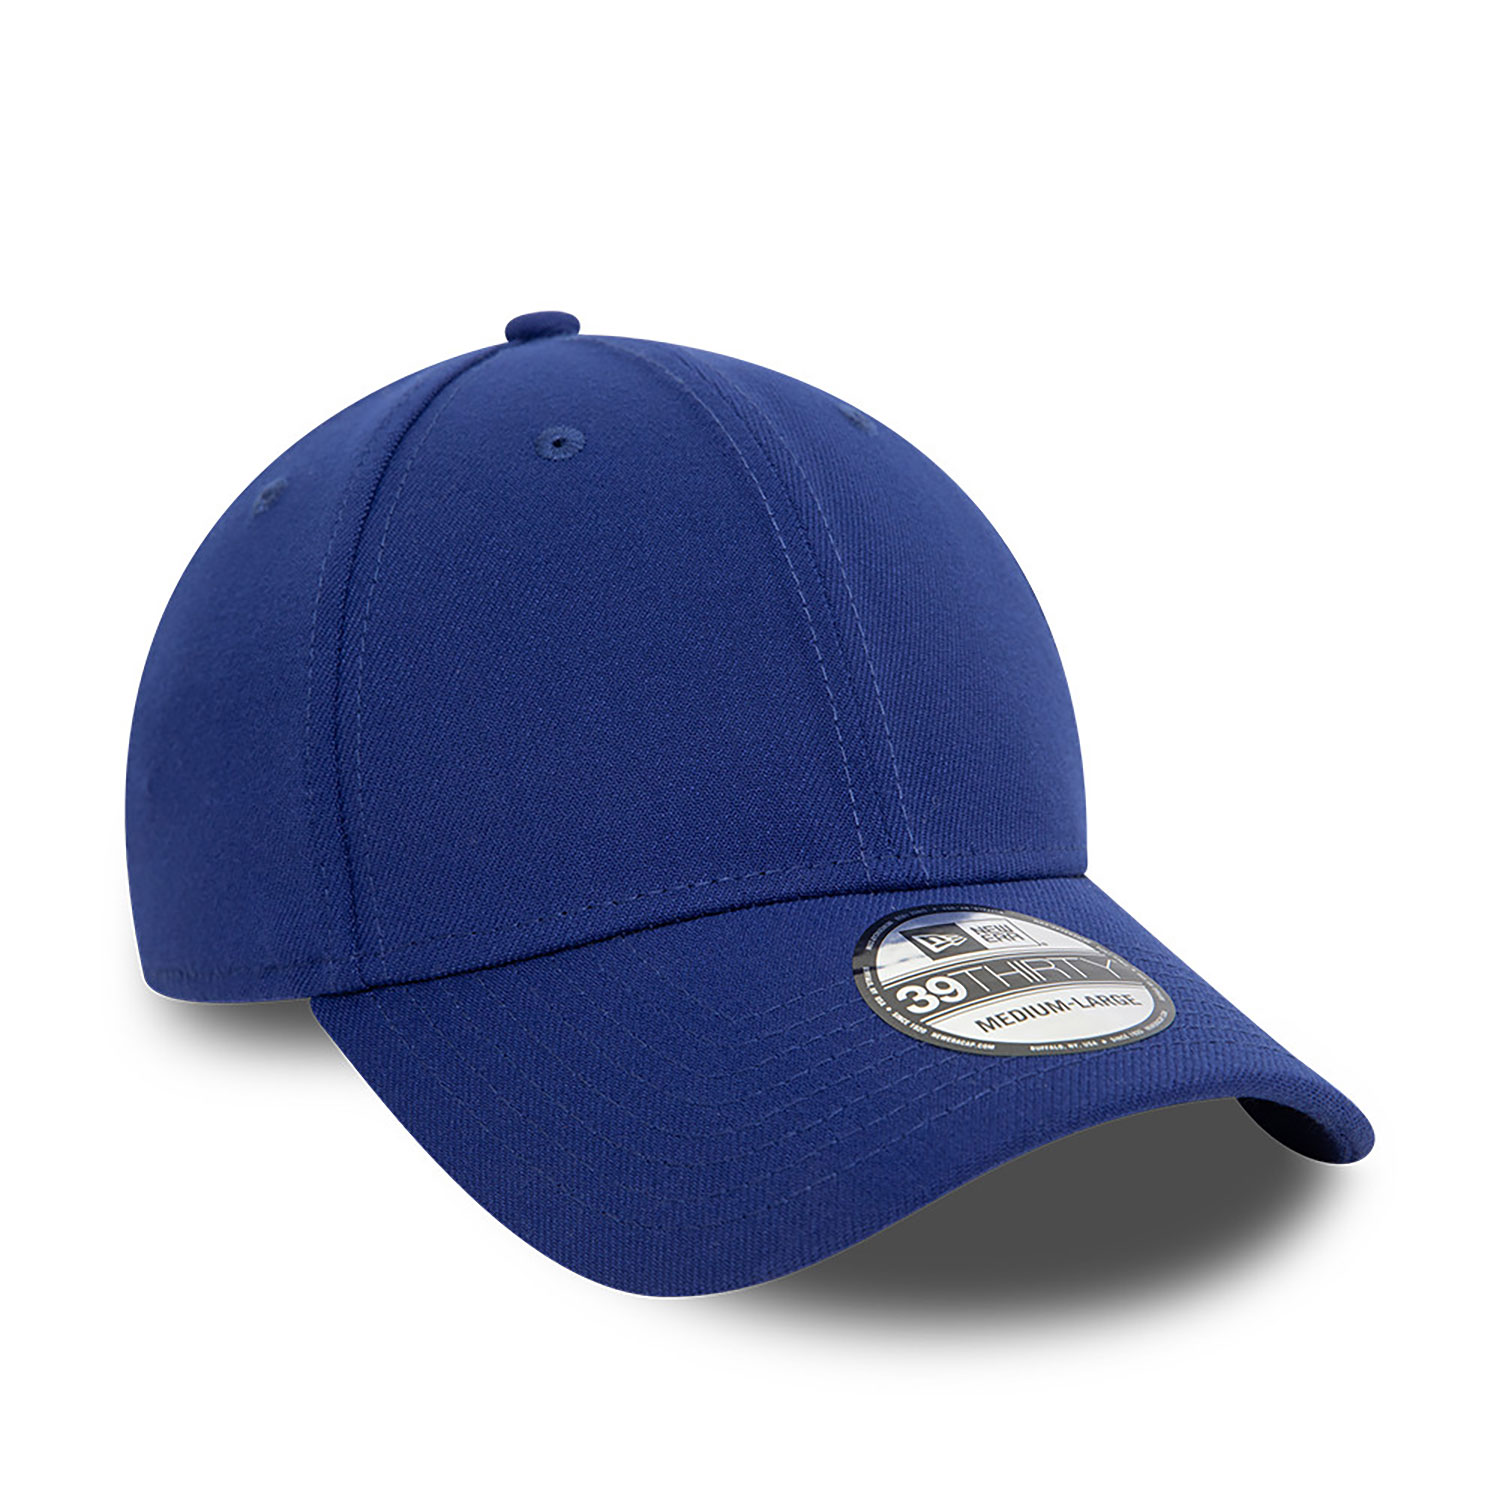 New Era Dark Blue 39THIRTY Stretch Fit Cap